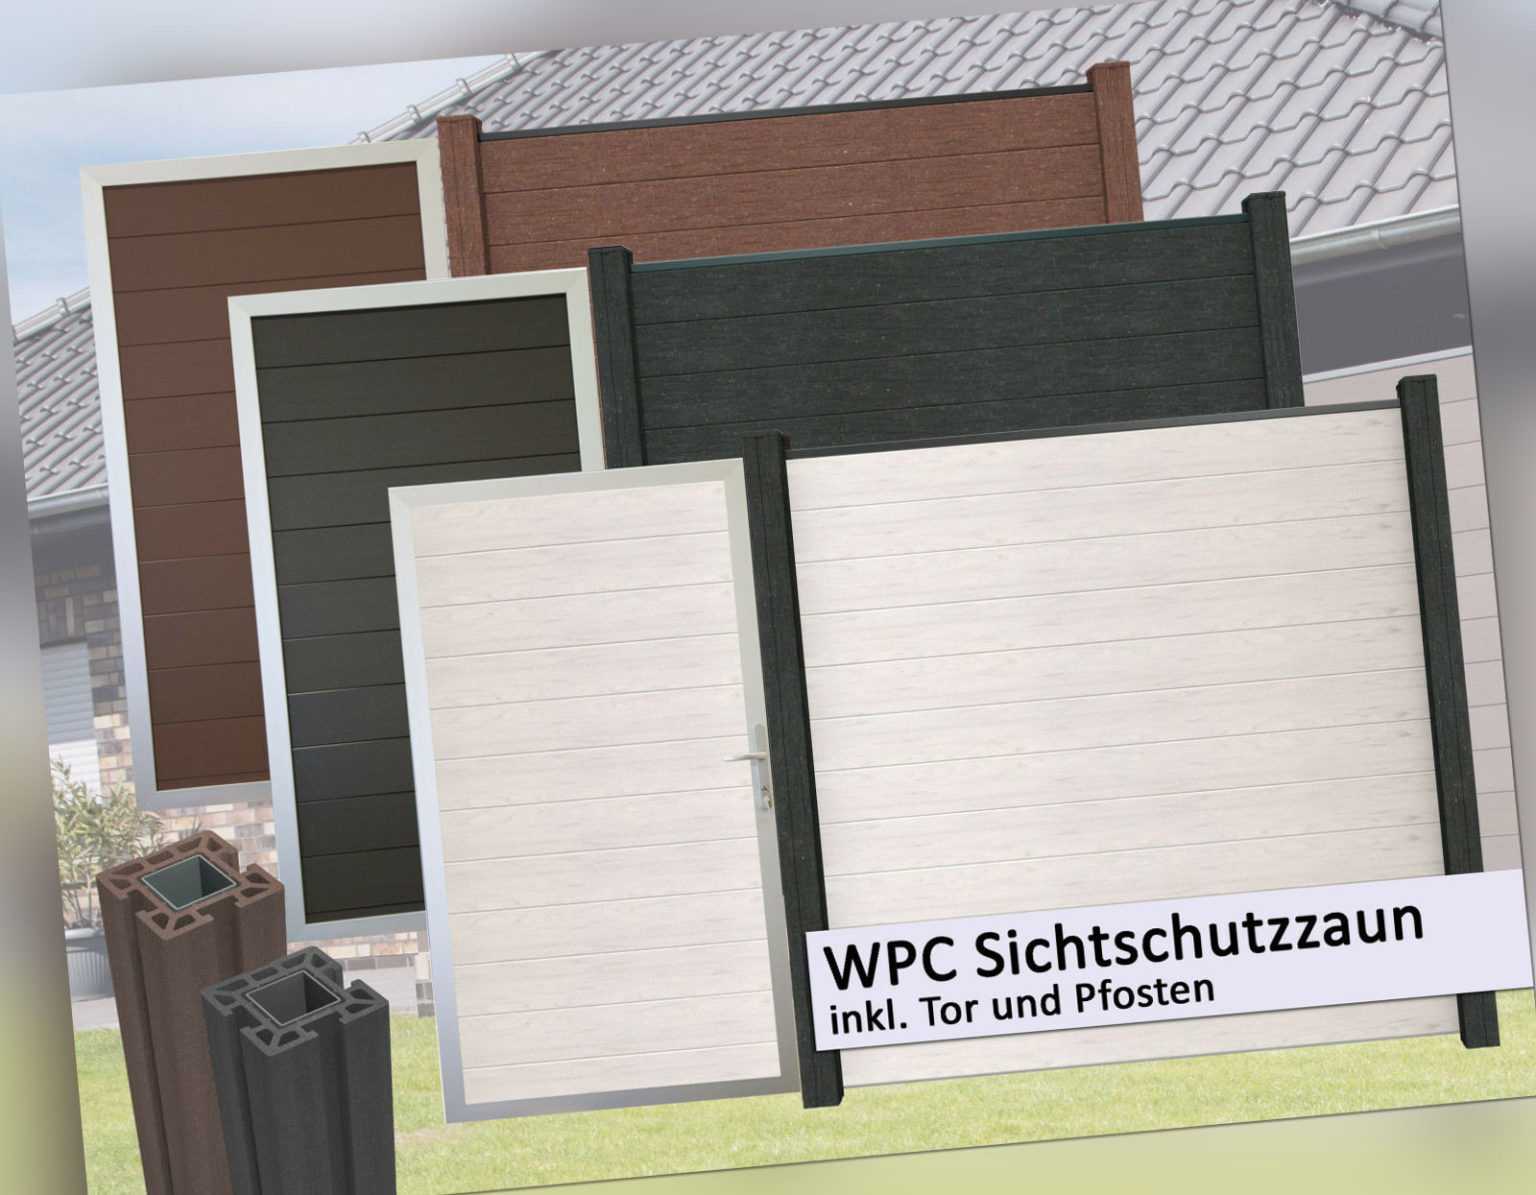 WPC / BPC Sichtschutzzaun inkl. Pfosten & Tor Sichtschutz Gartenzaun Zaun Türe